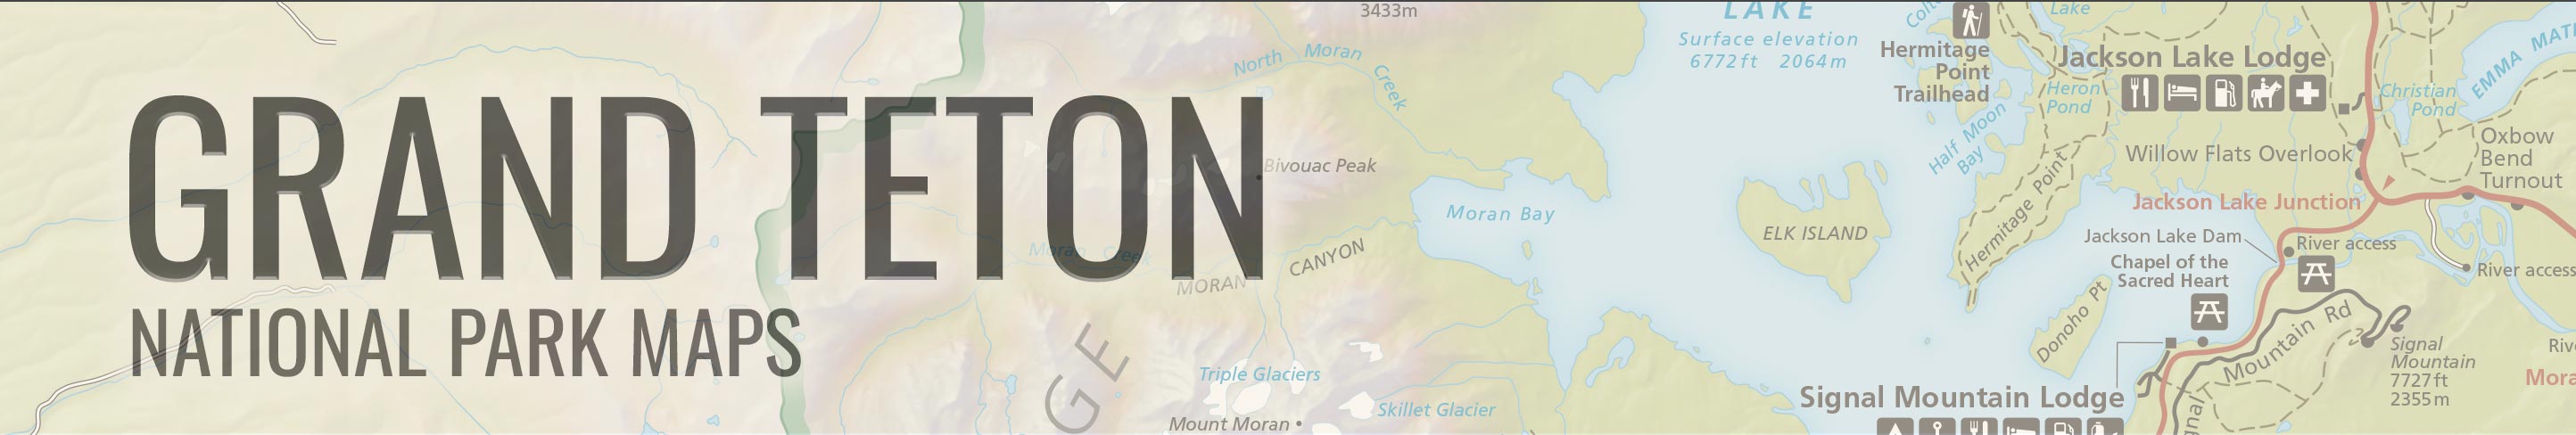 grand-teton-national-park-maps-header